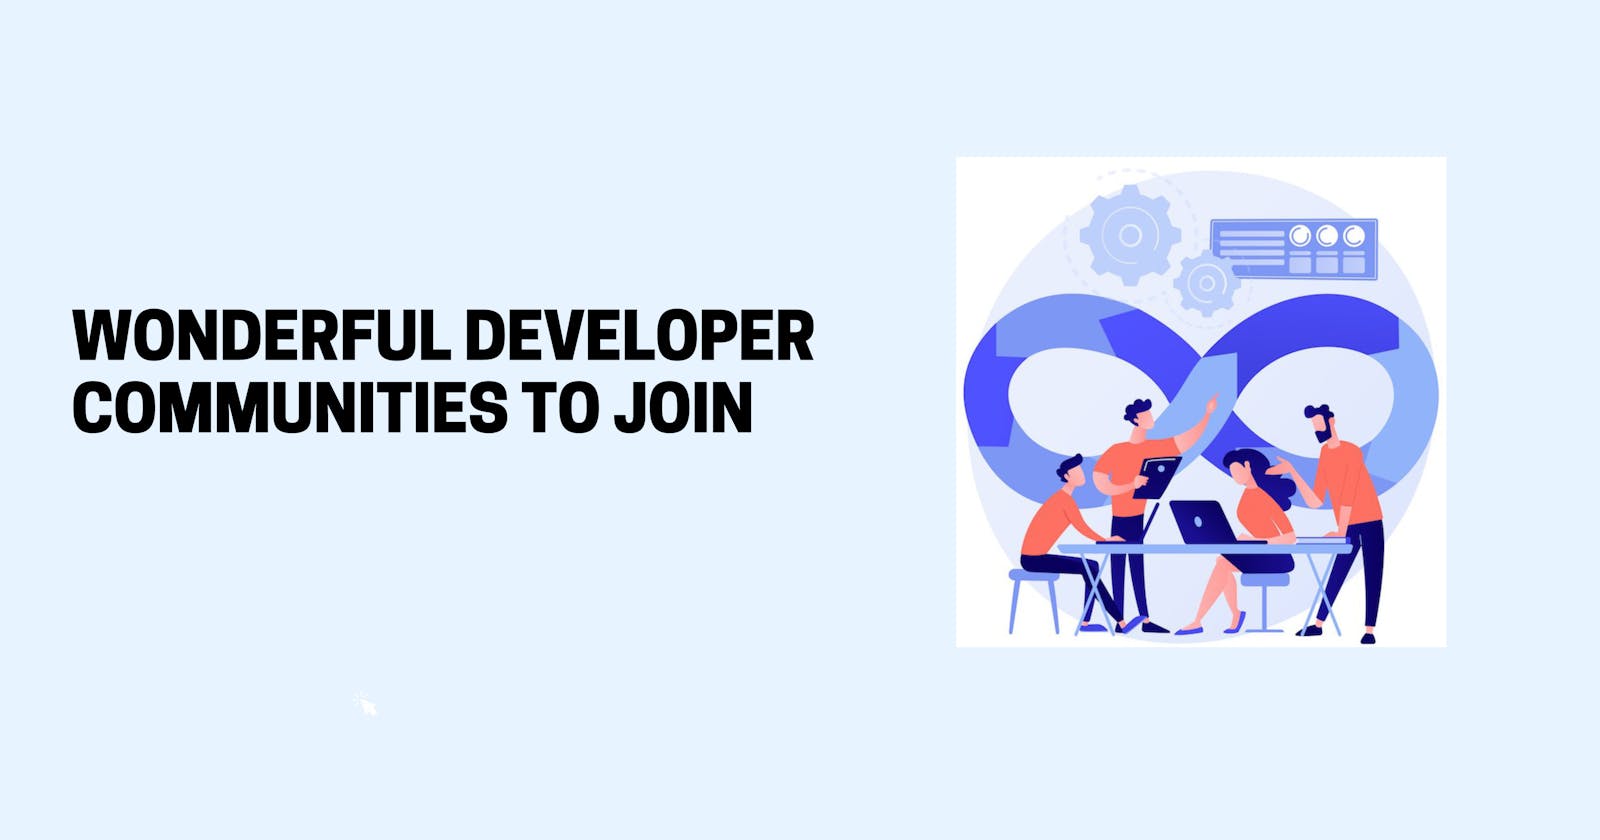 Wonderful developer communities to join